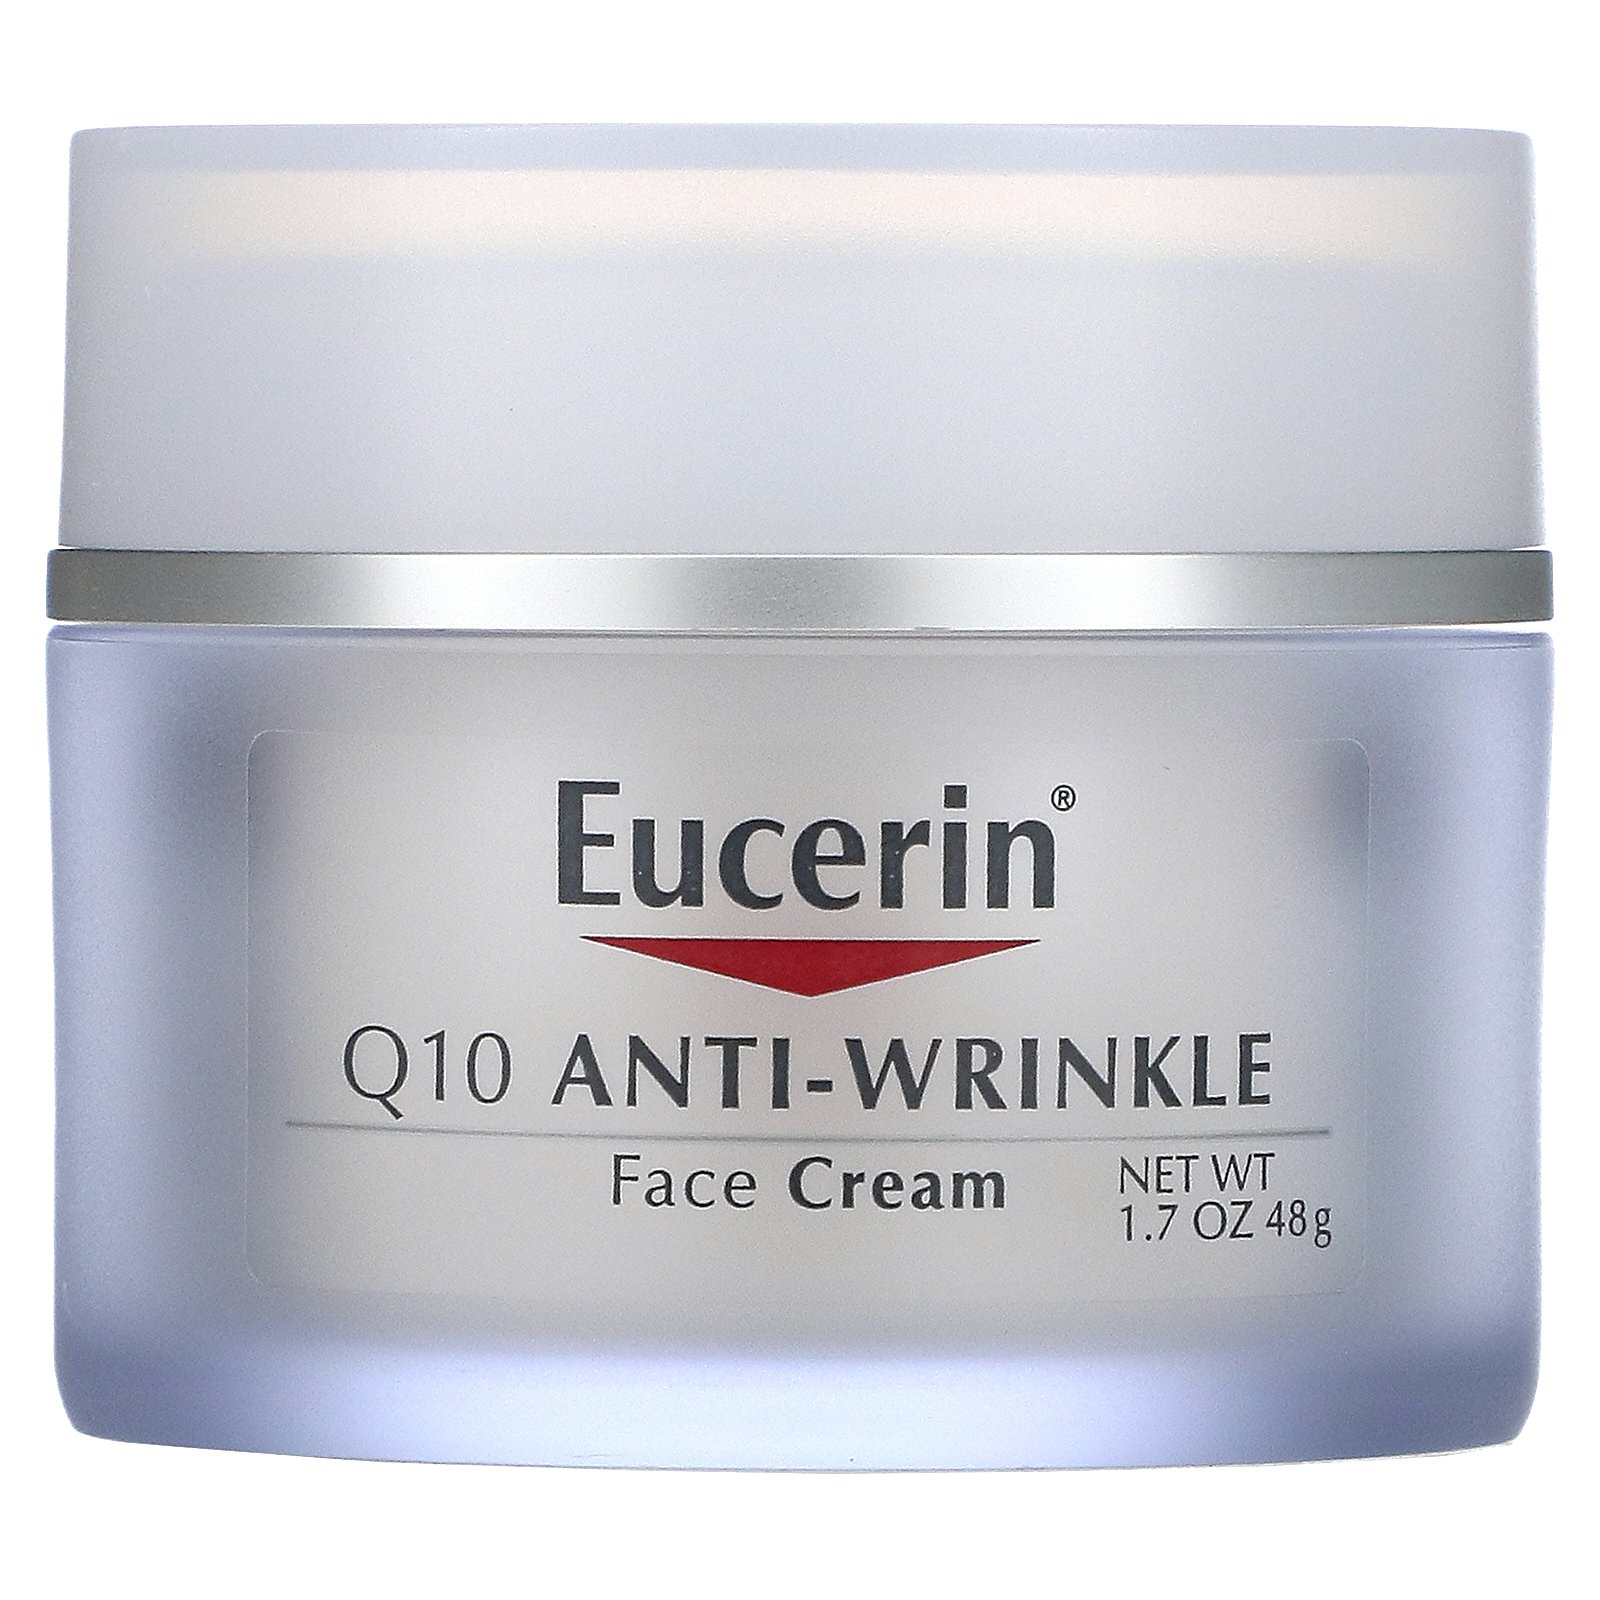 eucerin anti wrinkle face lotion